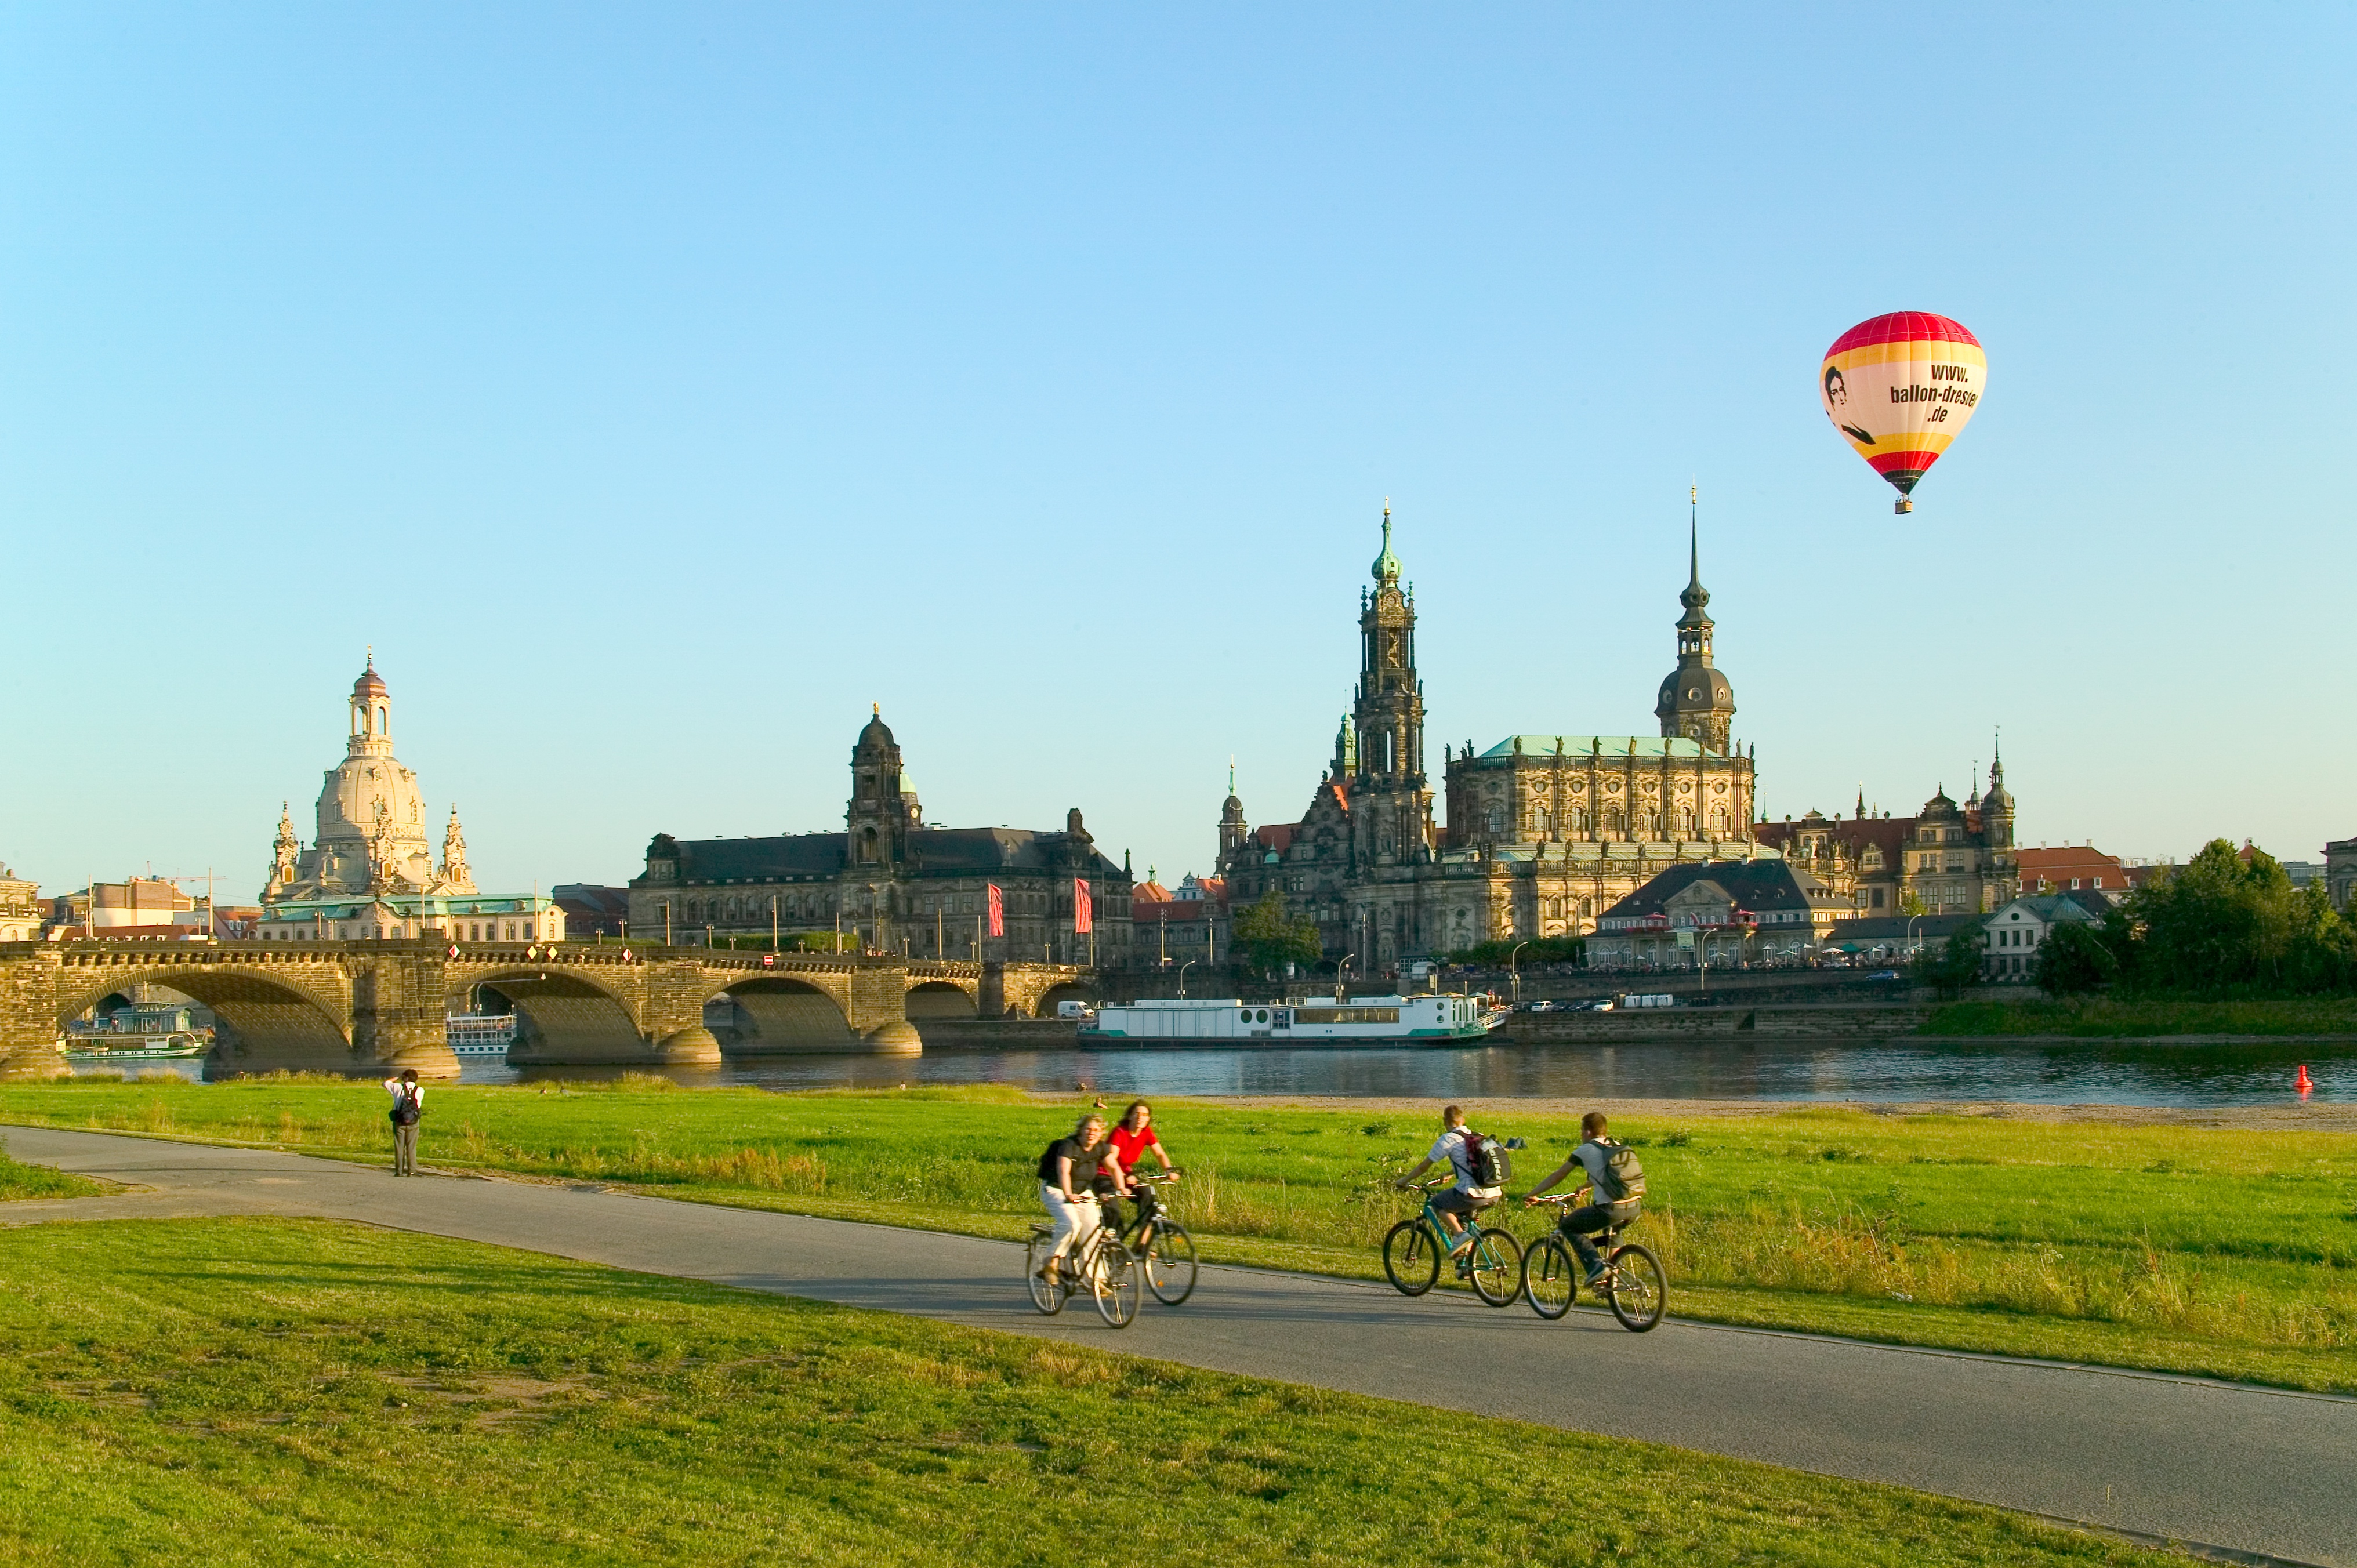 Dresden, un oras in care istoria vorbeste